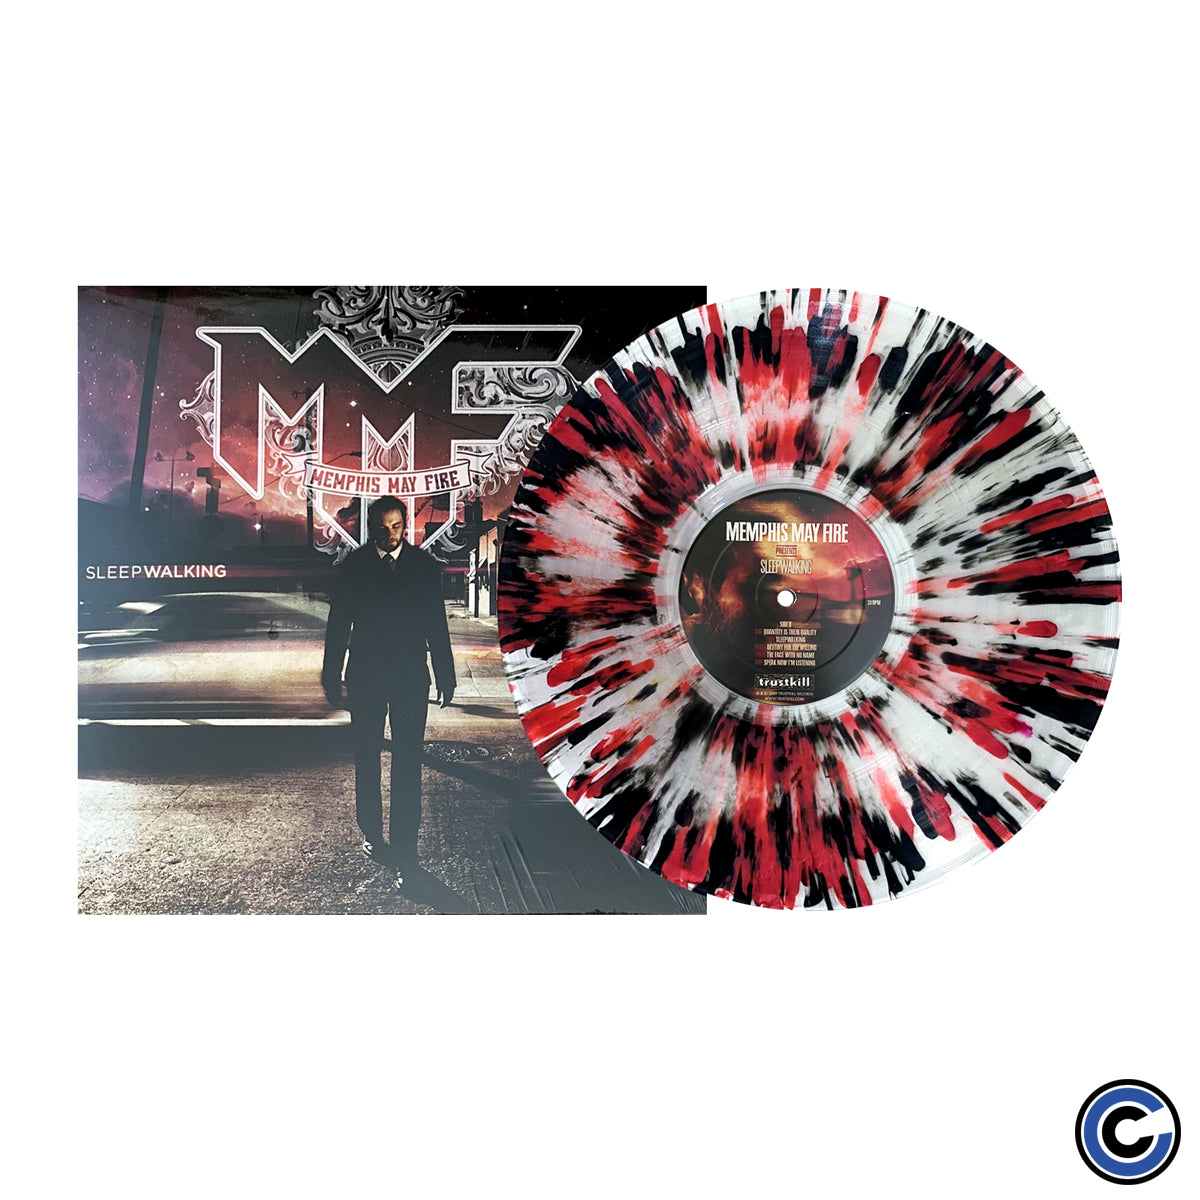 Memphis May Fire "Sleepwalking" 12" Limited Edition Vinyl